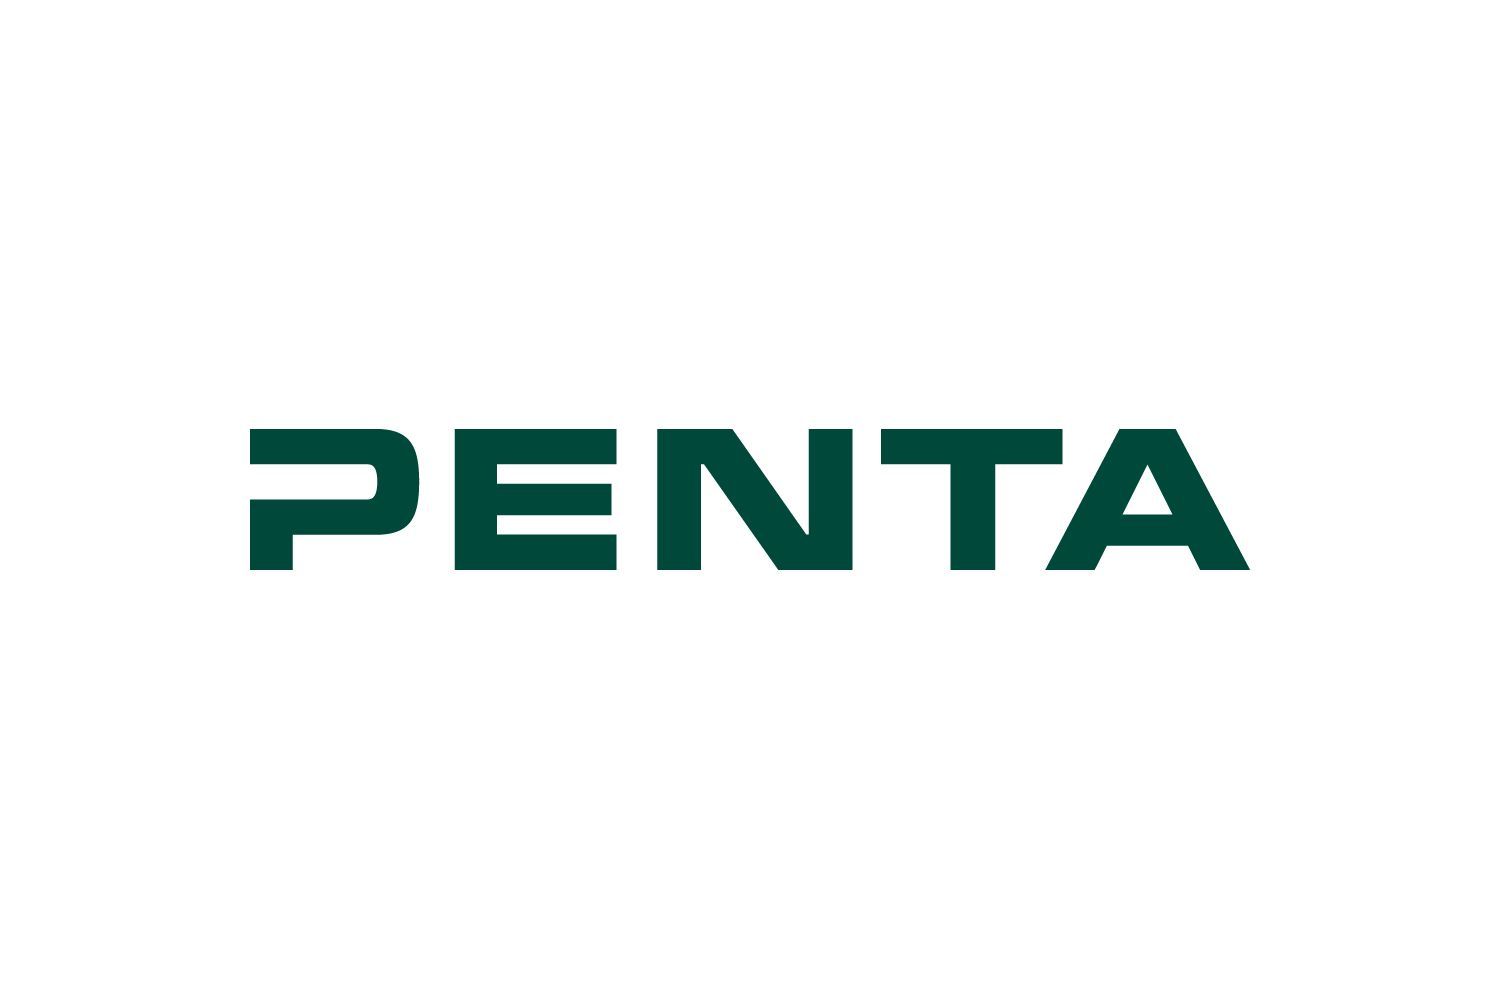 Logo Penta Investments